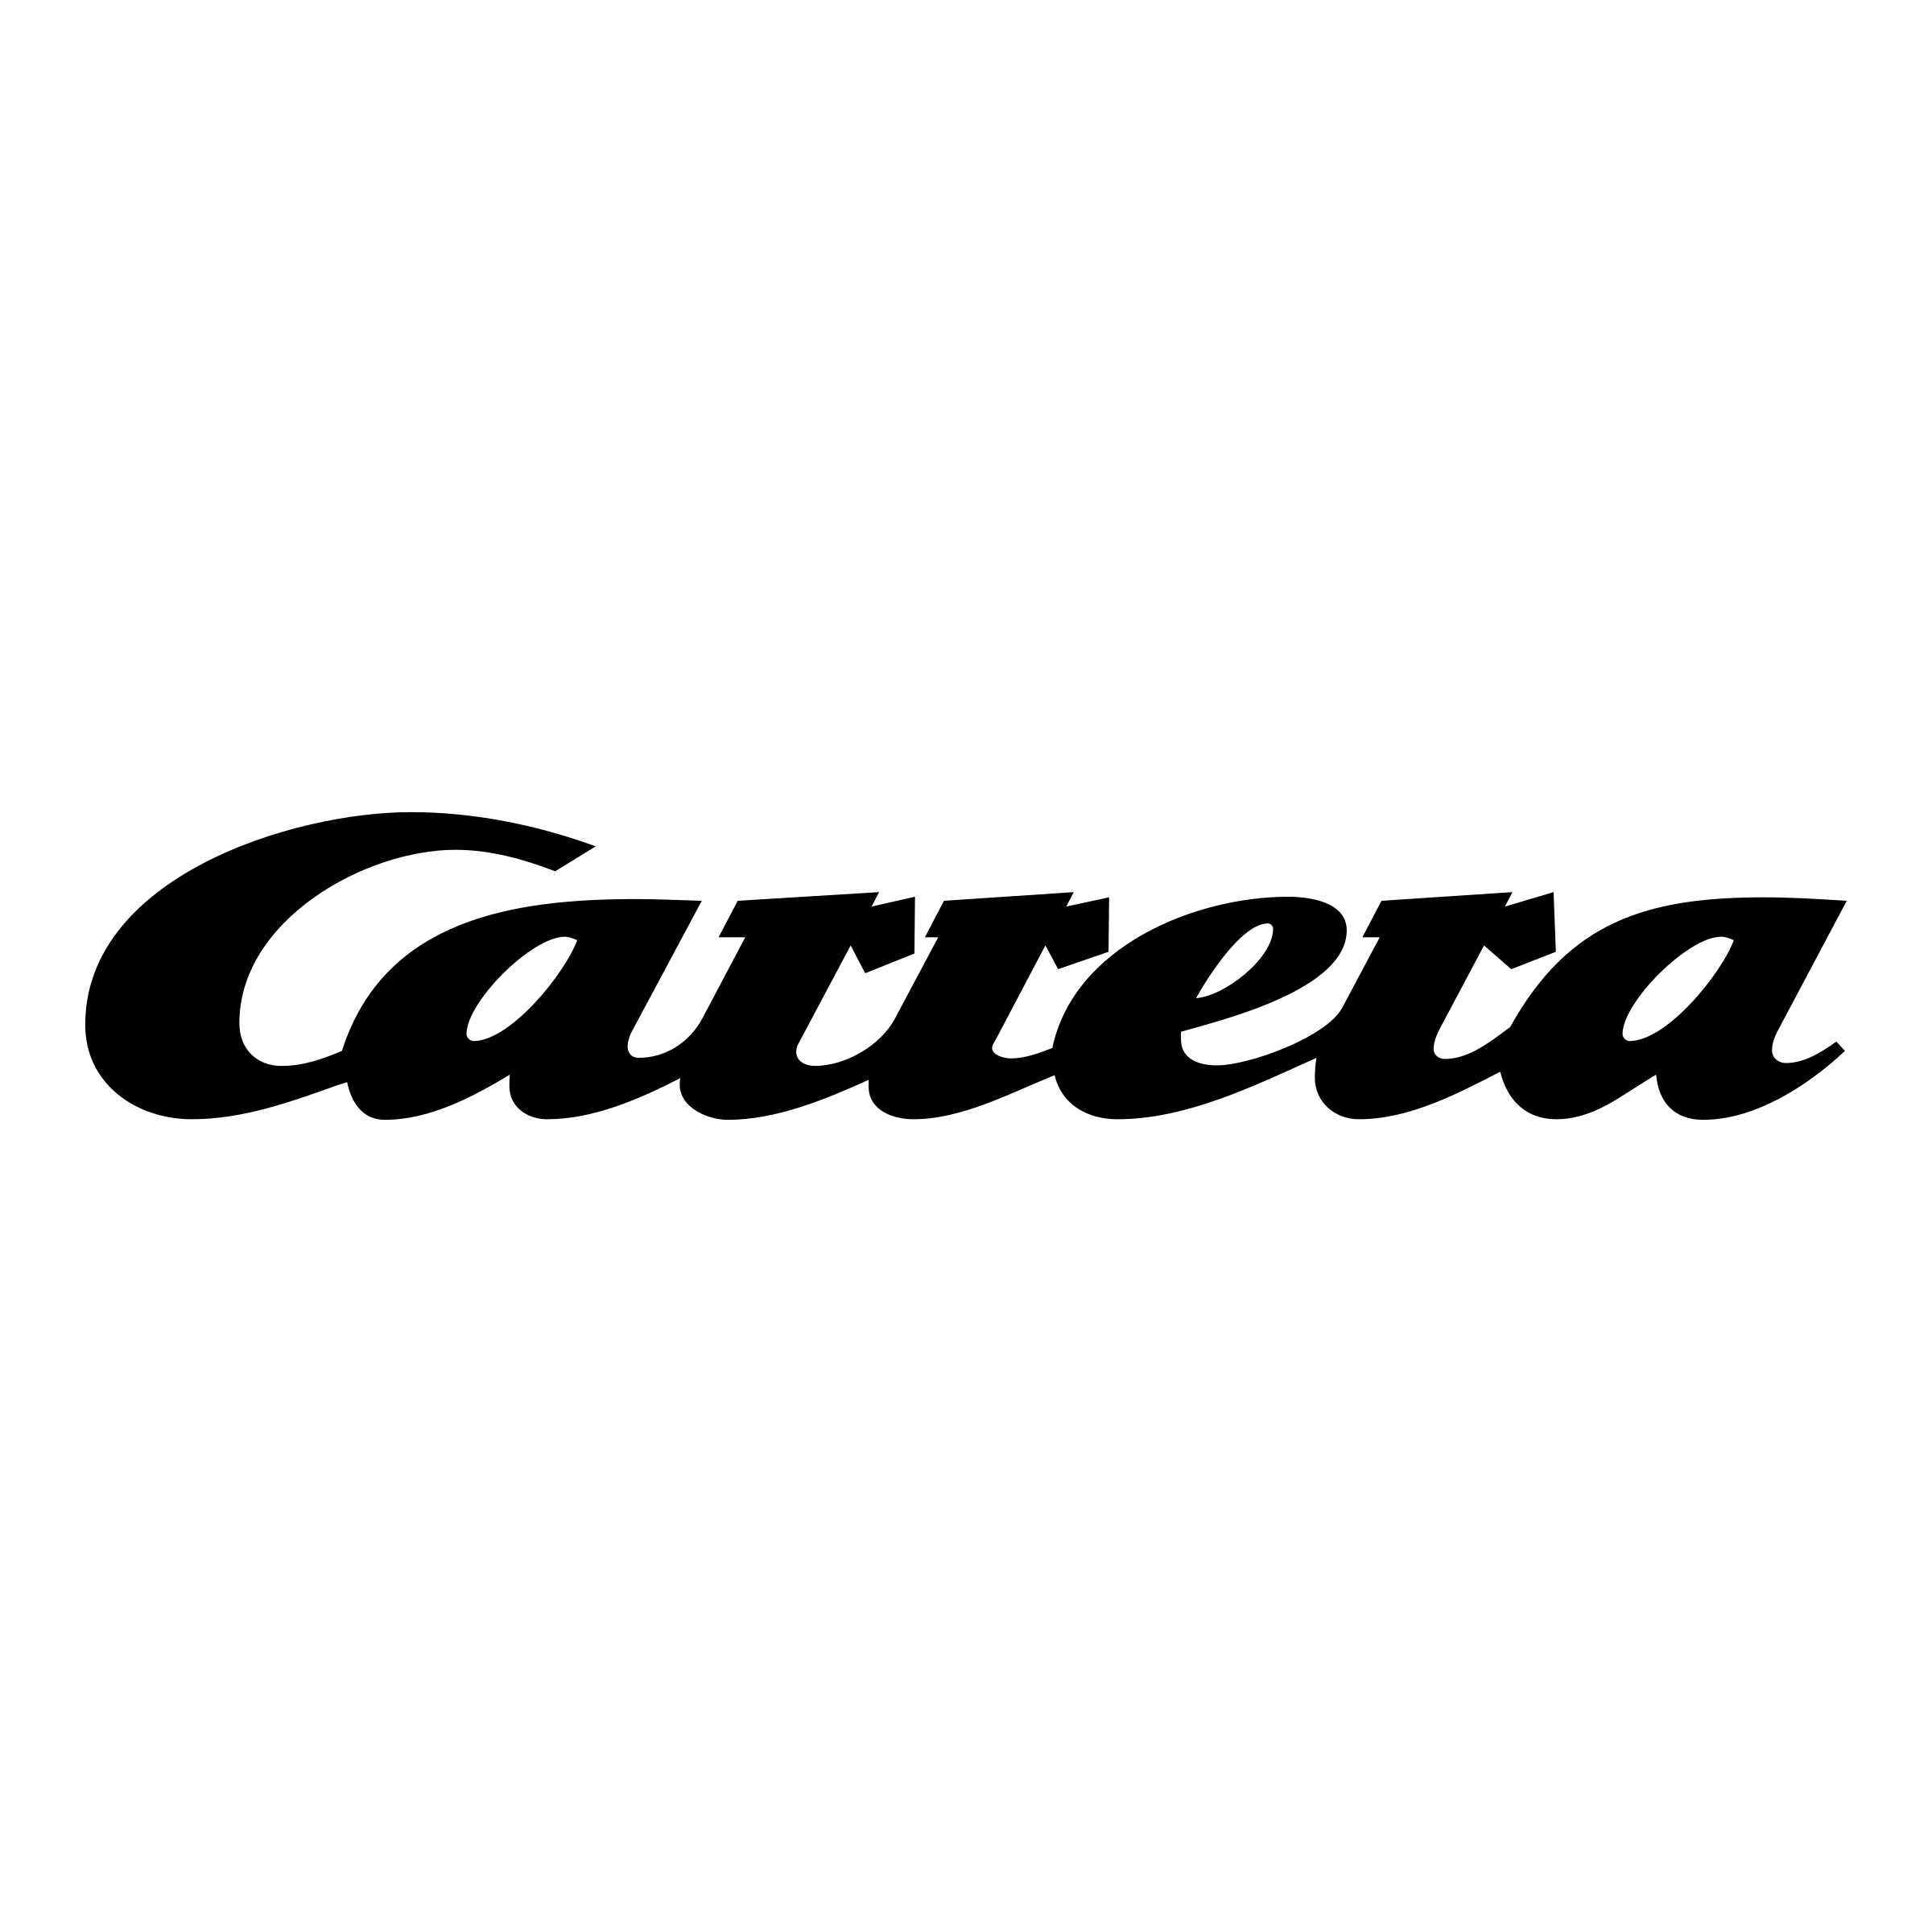 Carrera Logo - Carrera Logo PNG Transparent & SVG Vector - Freebie Supply